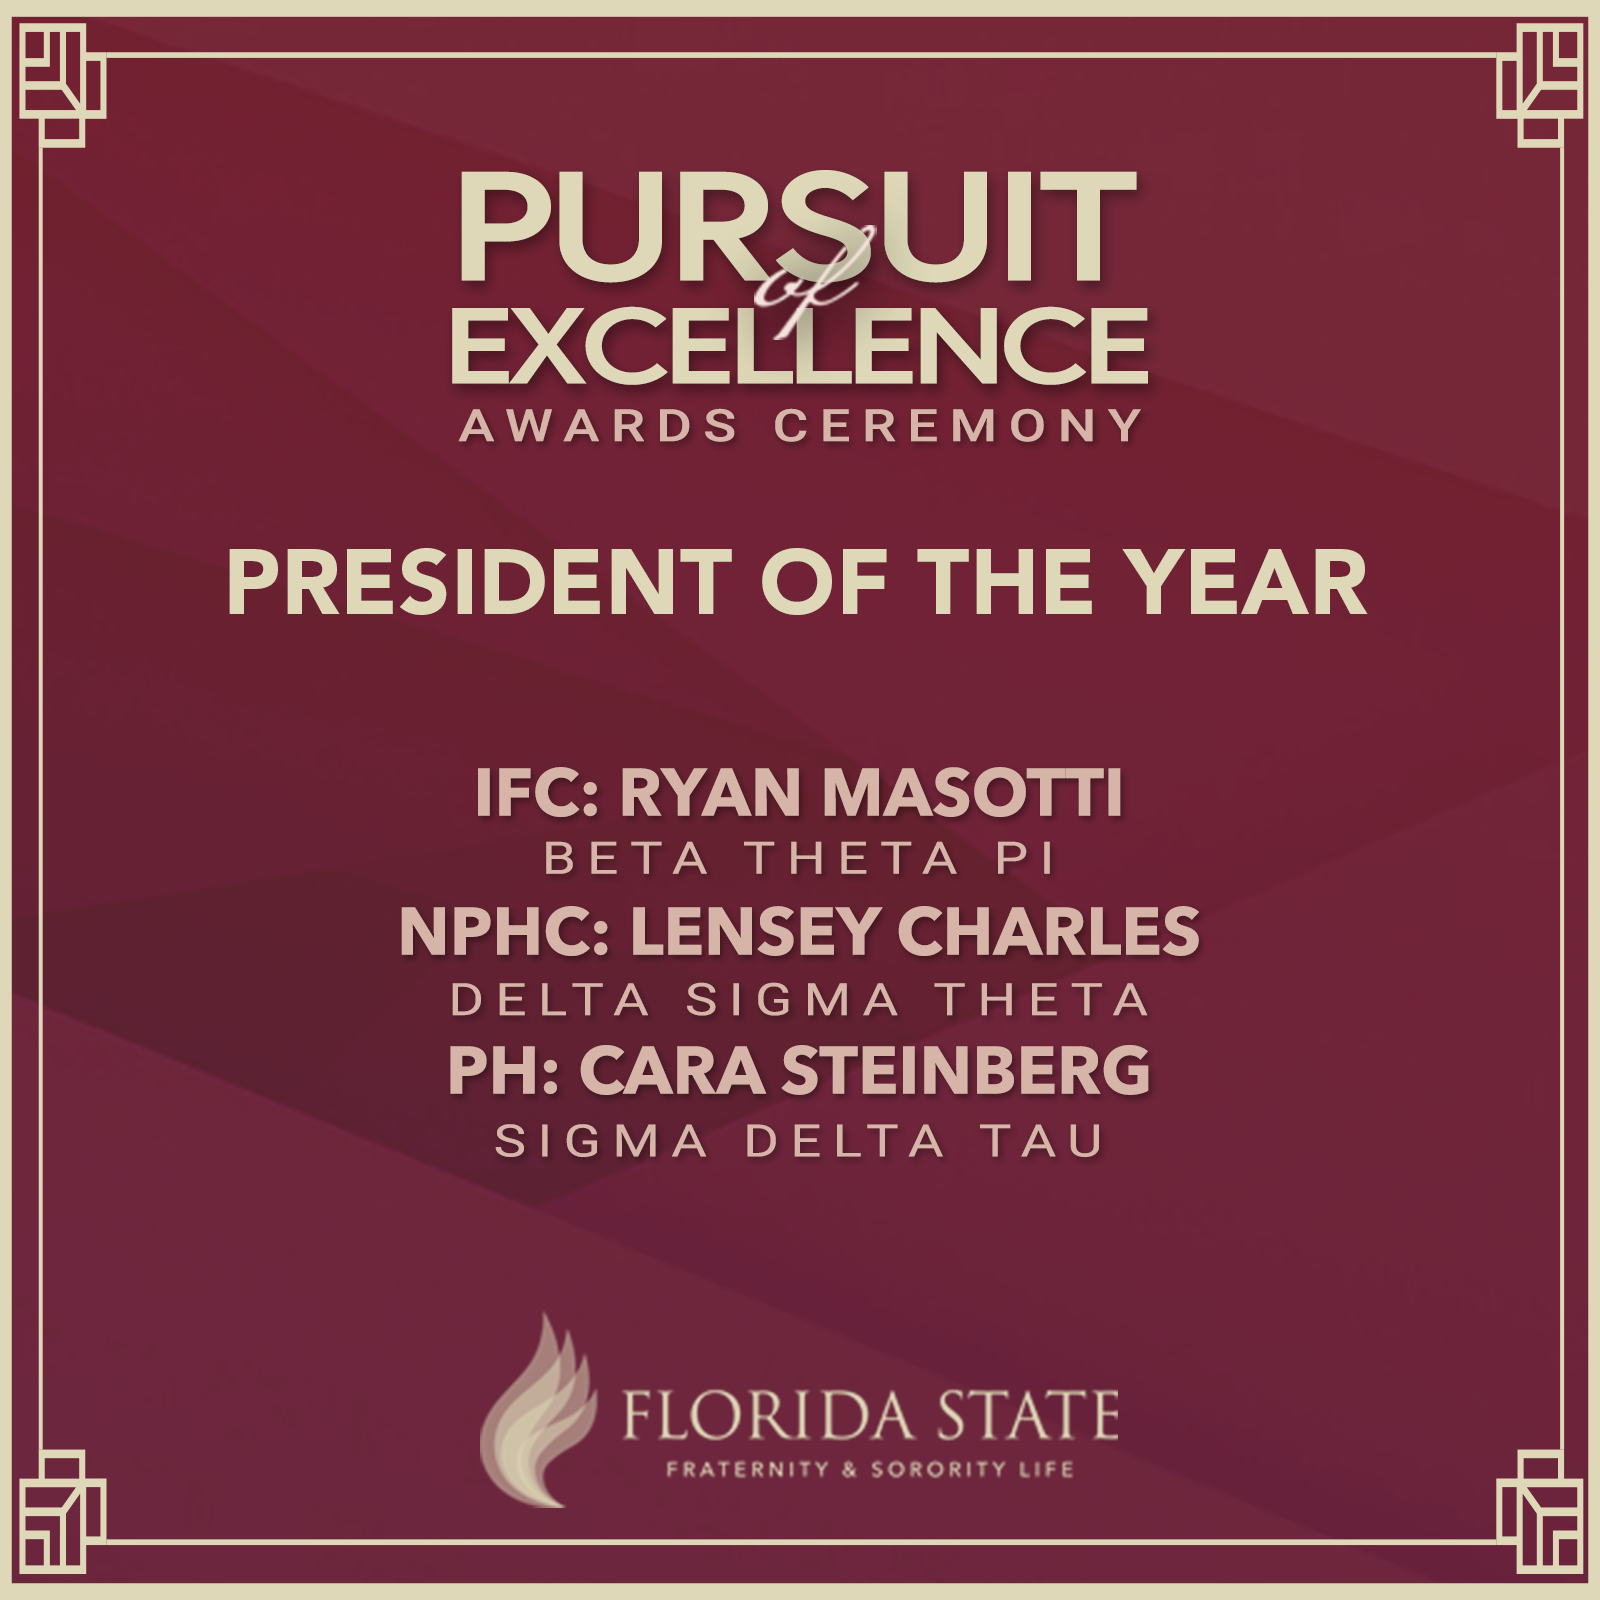 President of the year winners - Ryan Masotti, Lensey CHarles, and Cara Steinberg